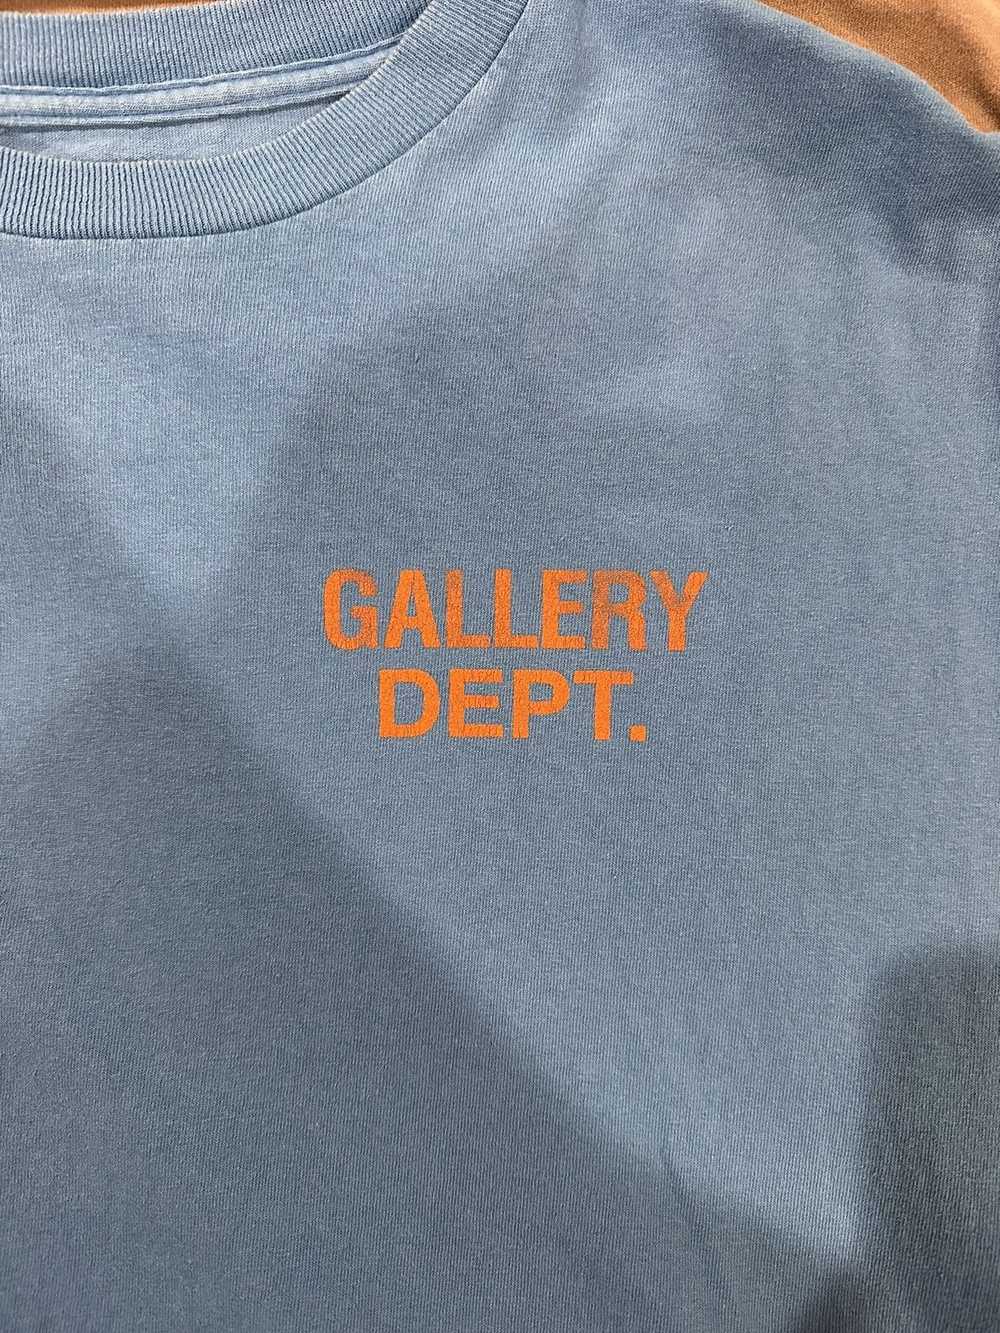 Gallery Dept. Gallery Dept blue souvenir t-shirt … - image 3